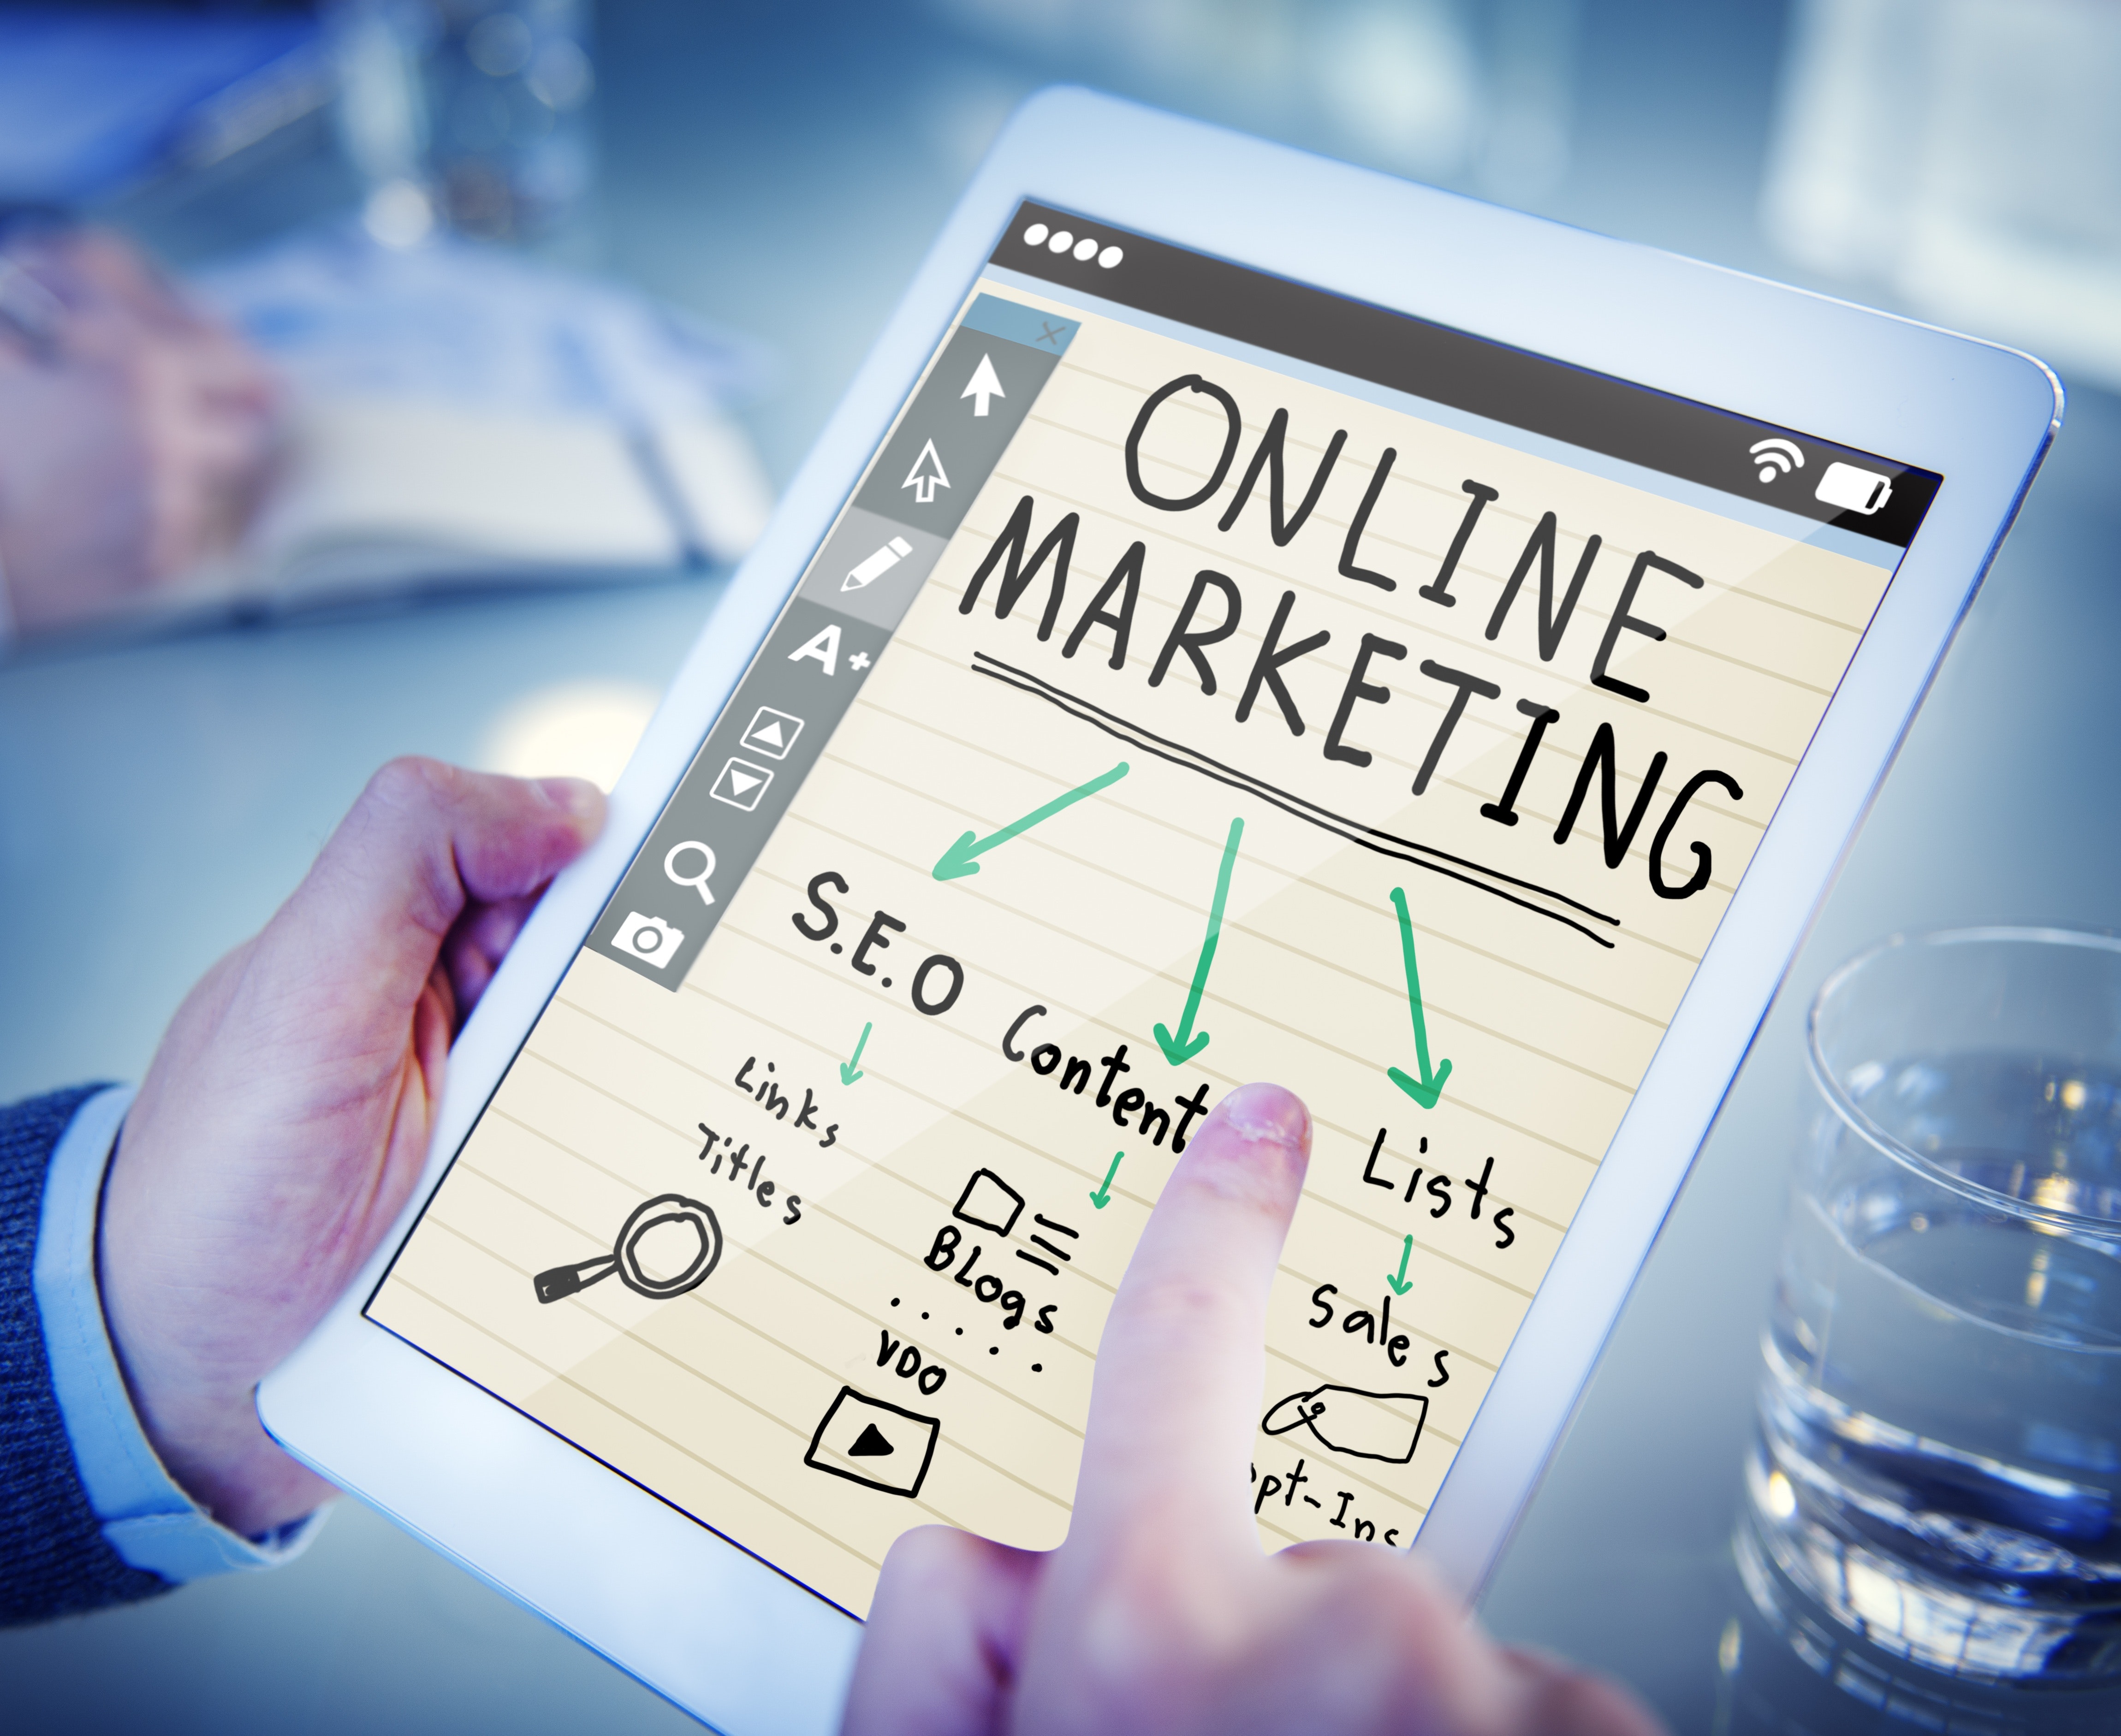 Online Marketing SEO Content Lists